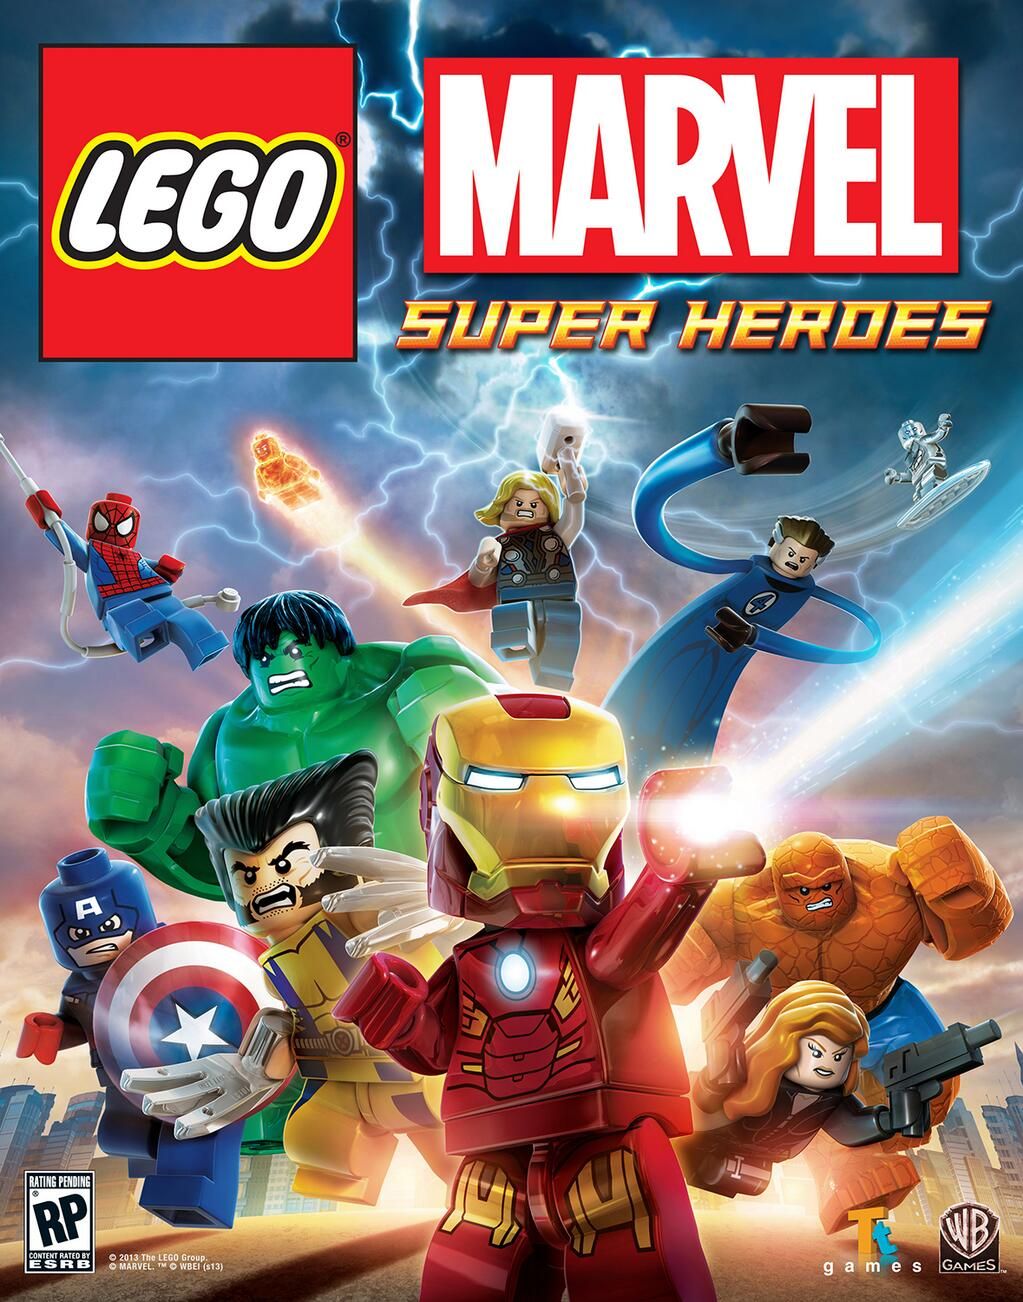 LEGO Marvel Super Heroes (Video Game) - TV Tropes